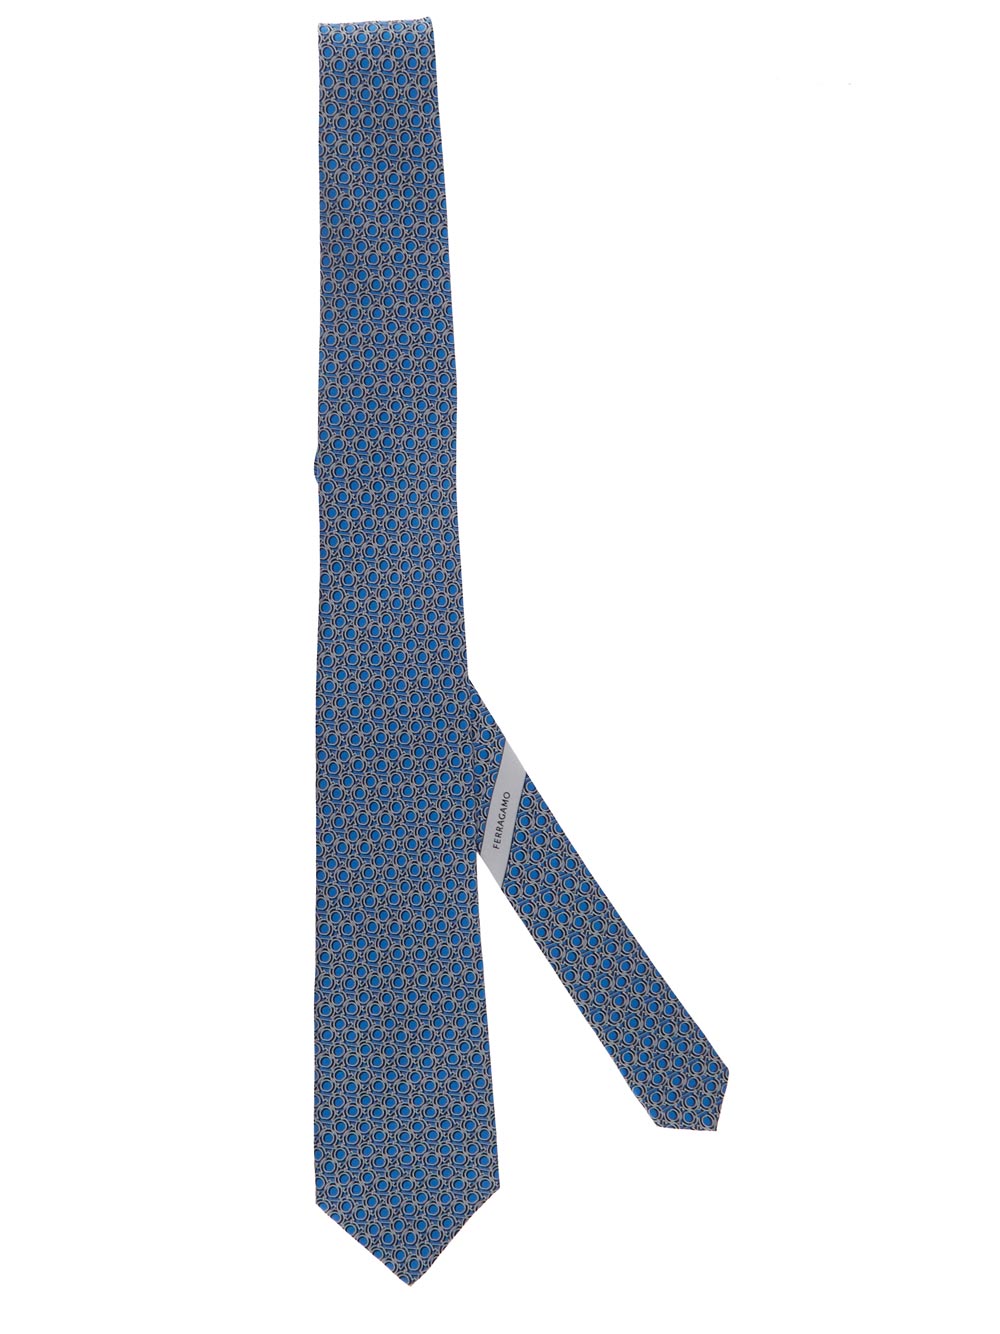 FERRAGAMO Printed Tie BLUE/MULTI